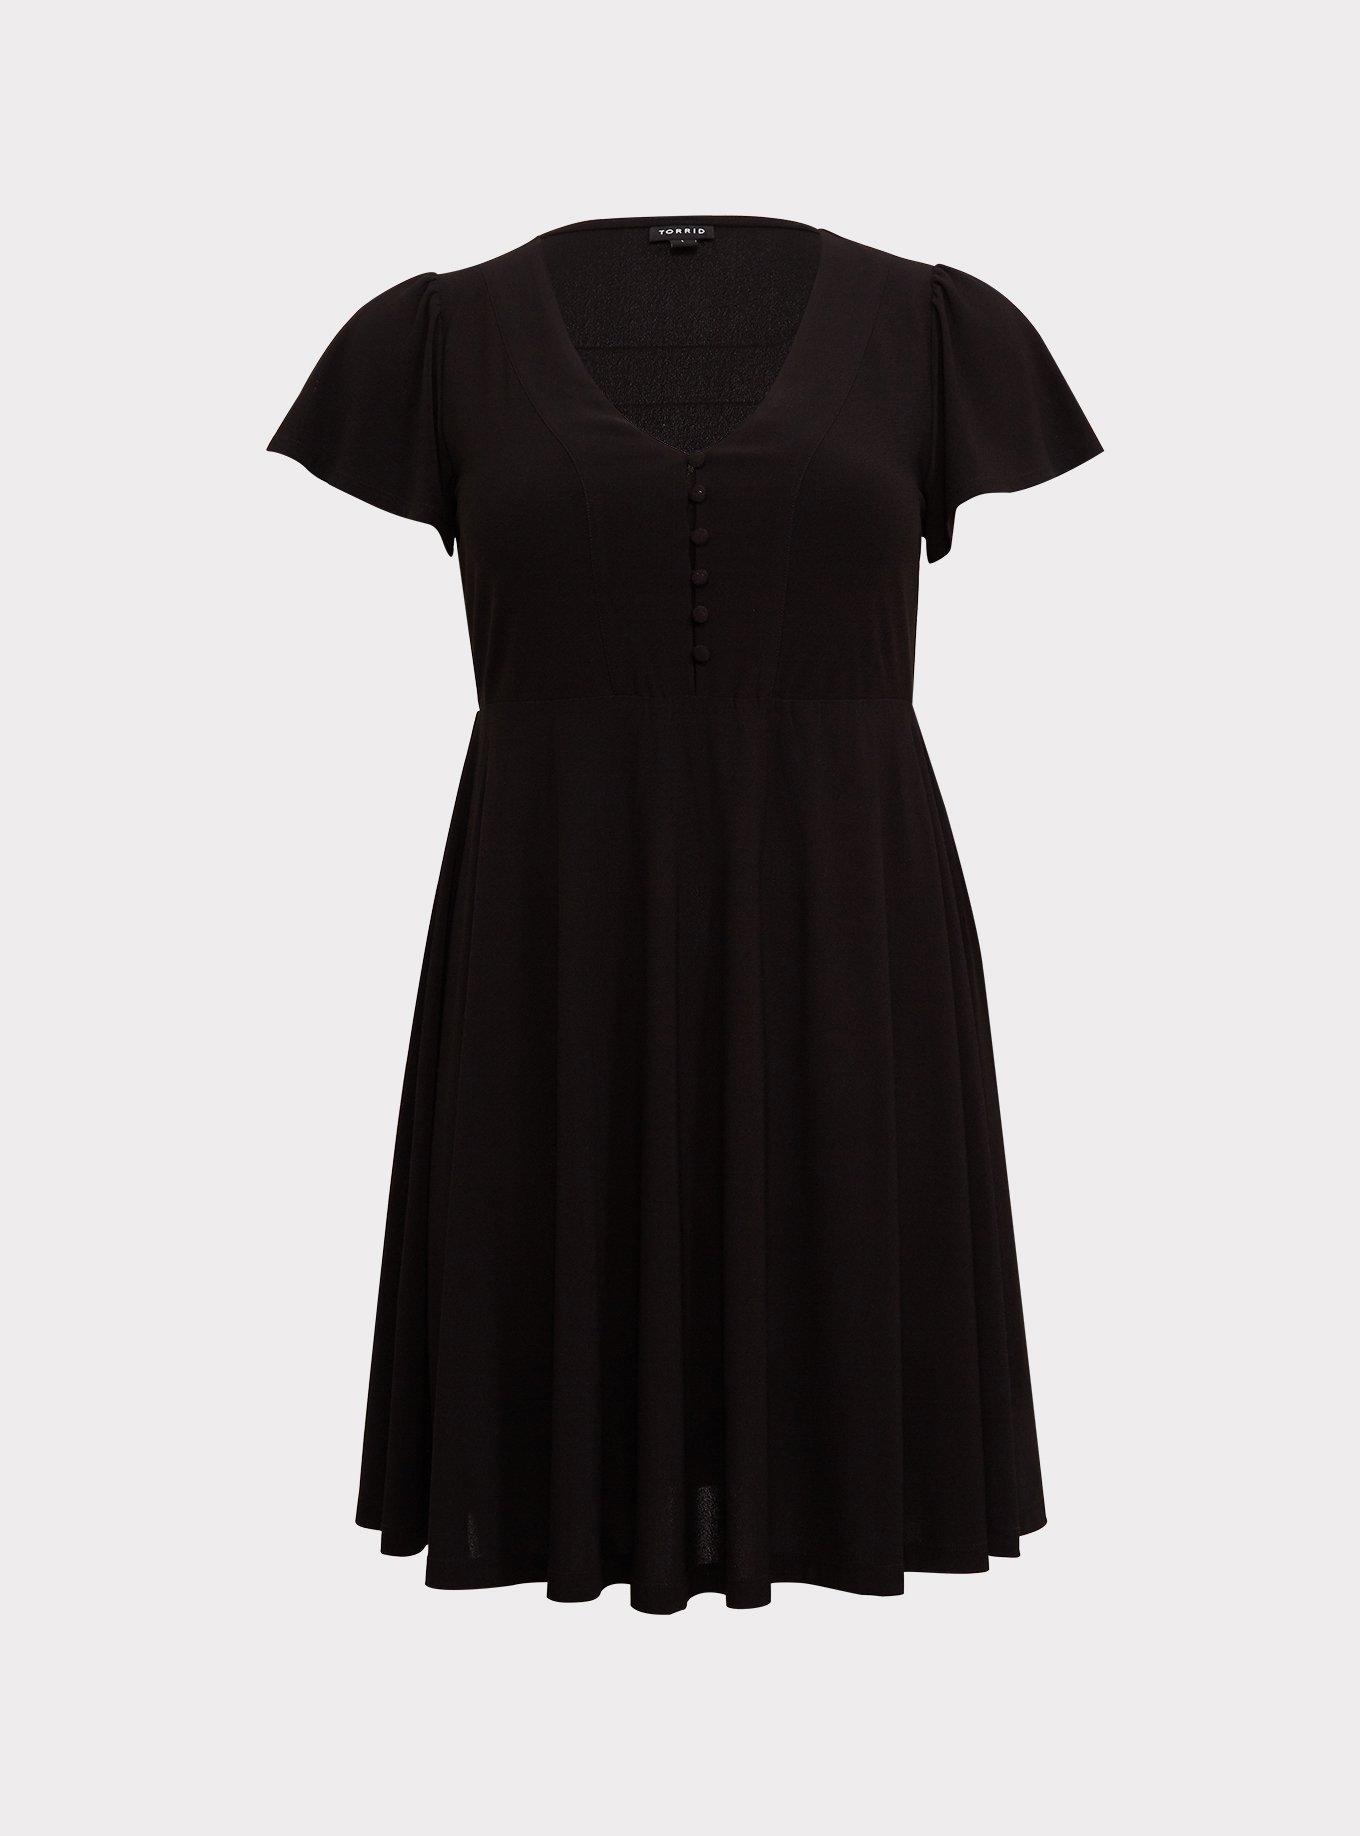 Plus Size - Black Button Front Crepe Skater Dress - Torrid